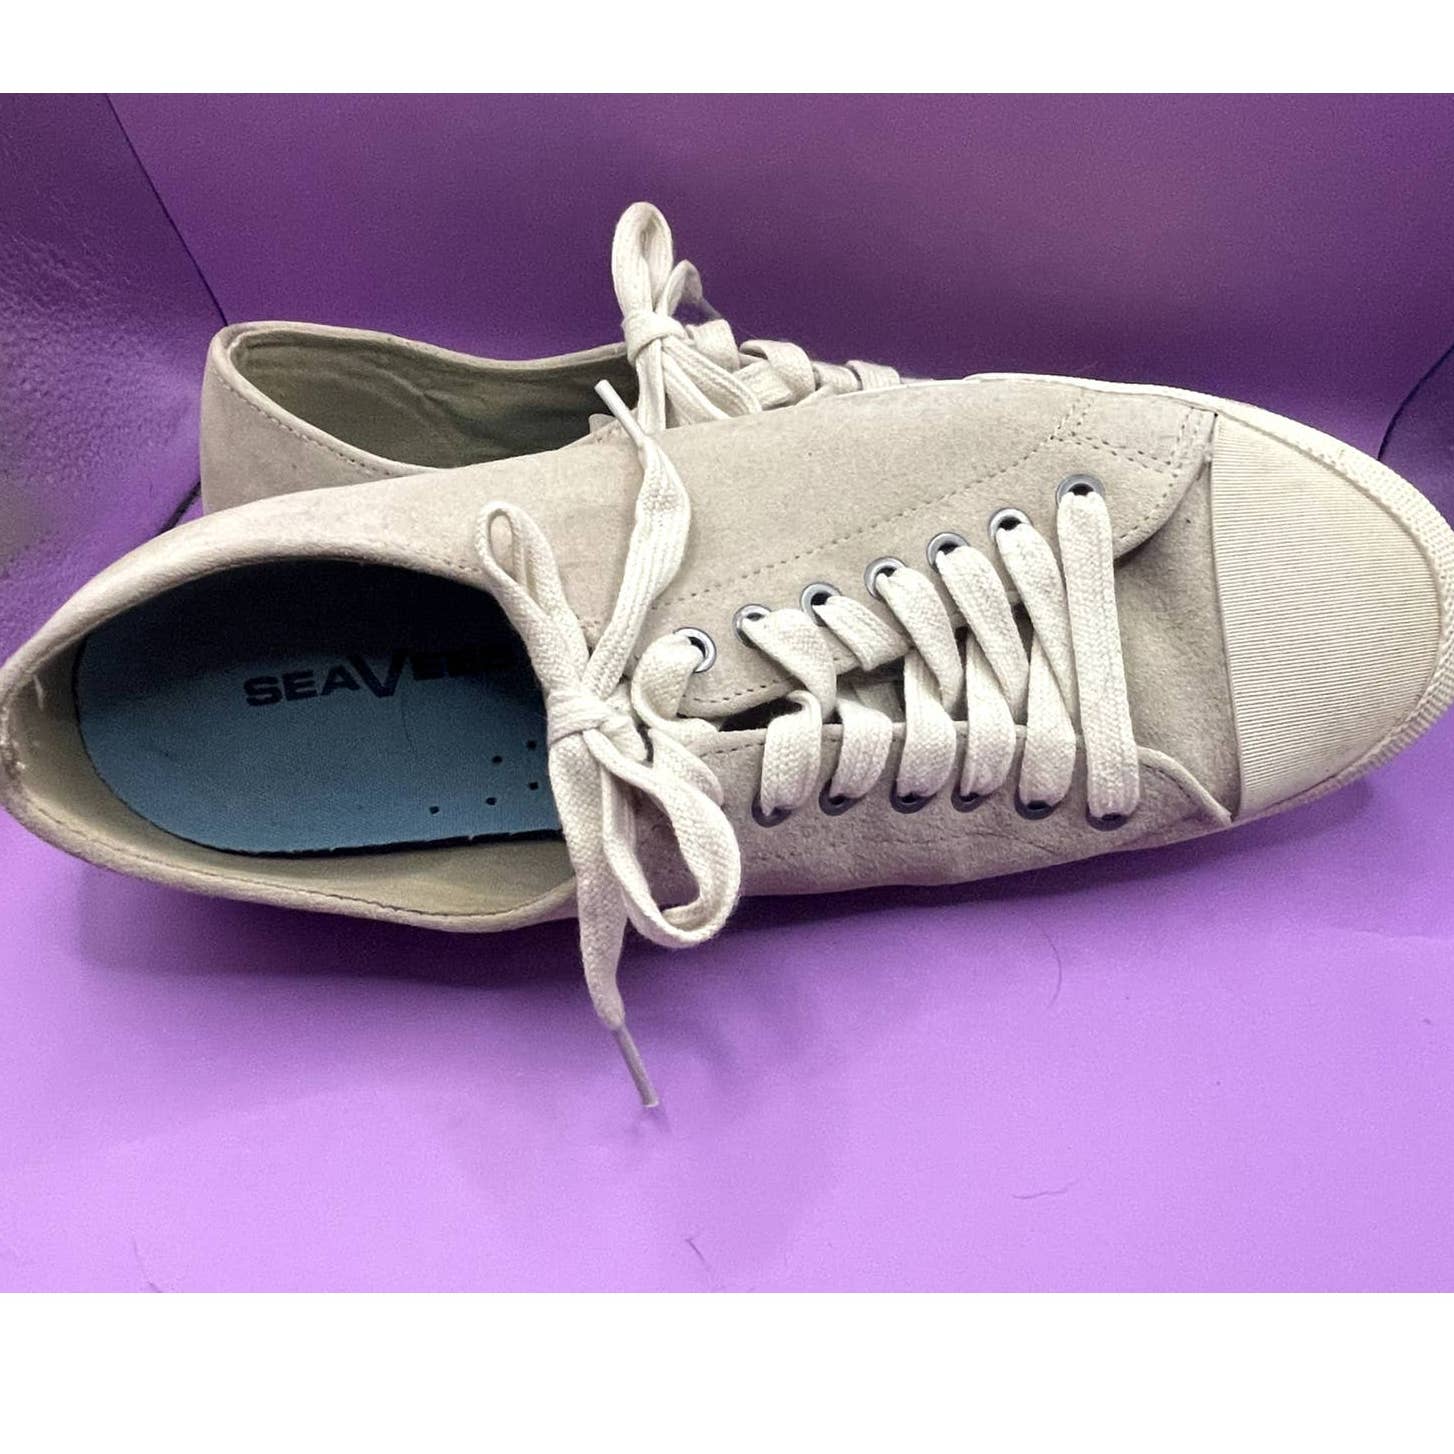 SeaVees Army Issue Low Tan Suede Cap Toe Sneakers - 12